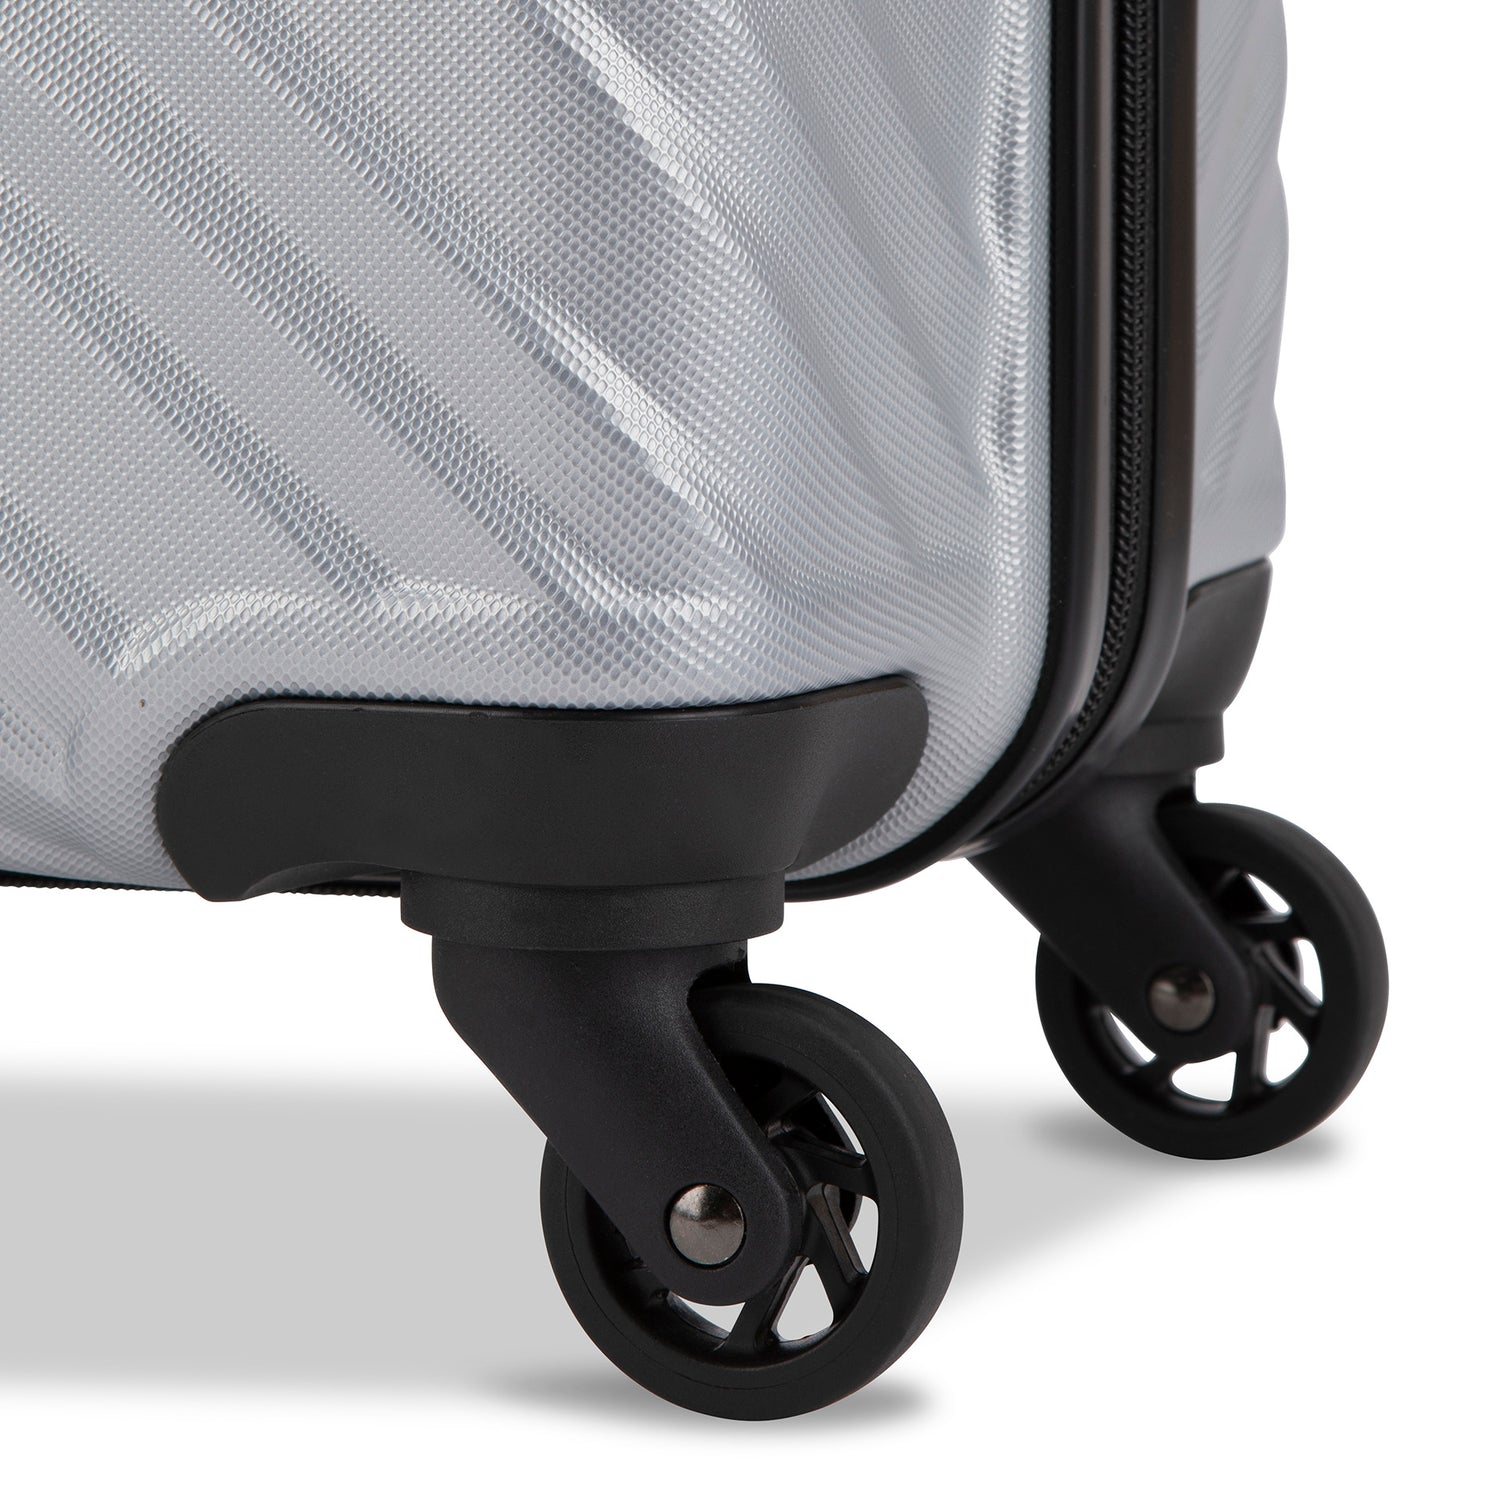 MOD Hardside 21" Carry-On Luggage -  - 

        Swiss Gear
      
